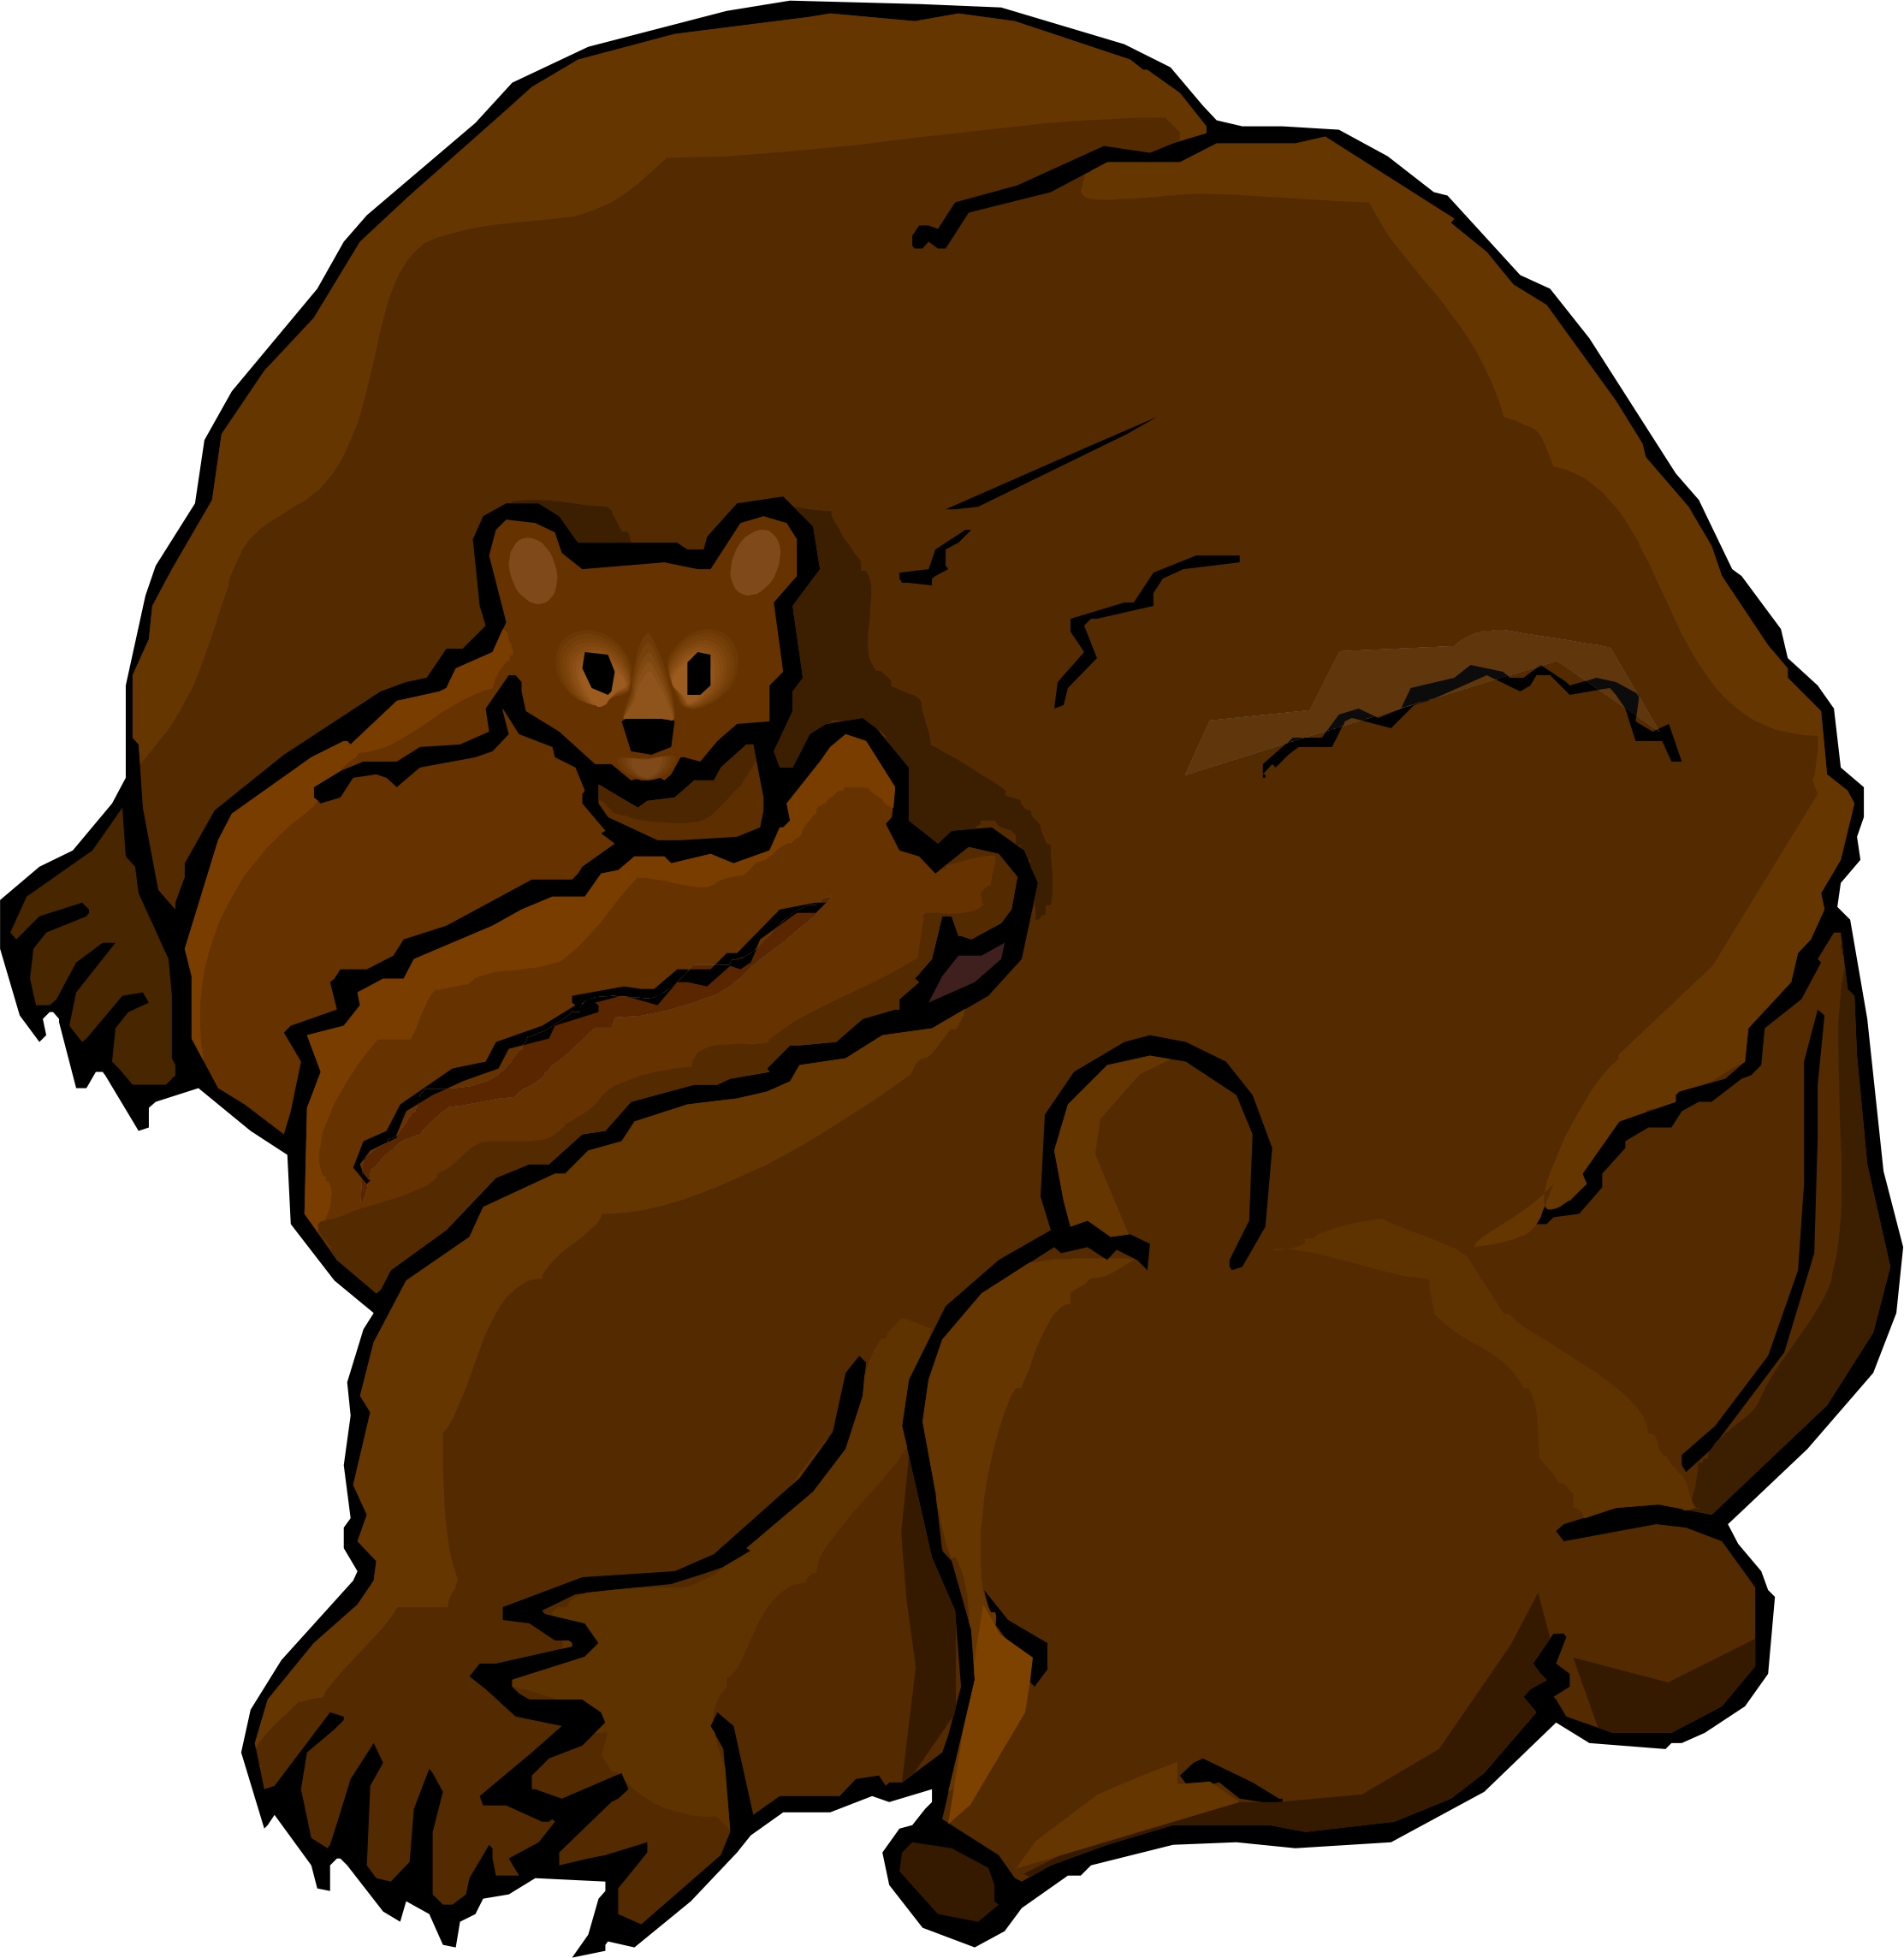 Bear Cartoon Images - Clipart library